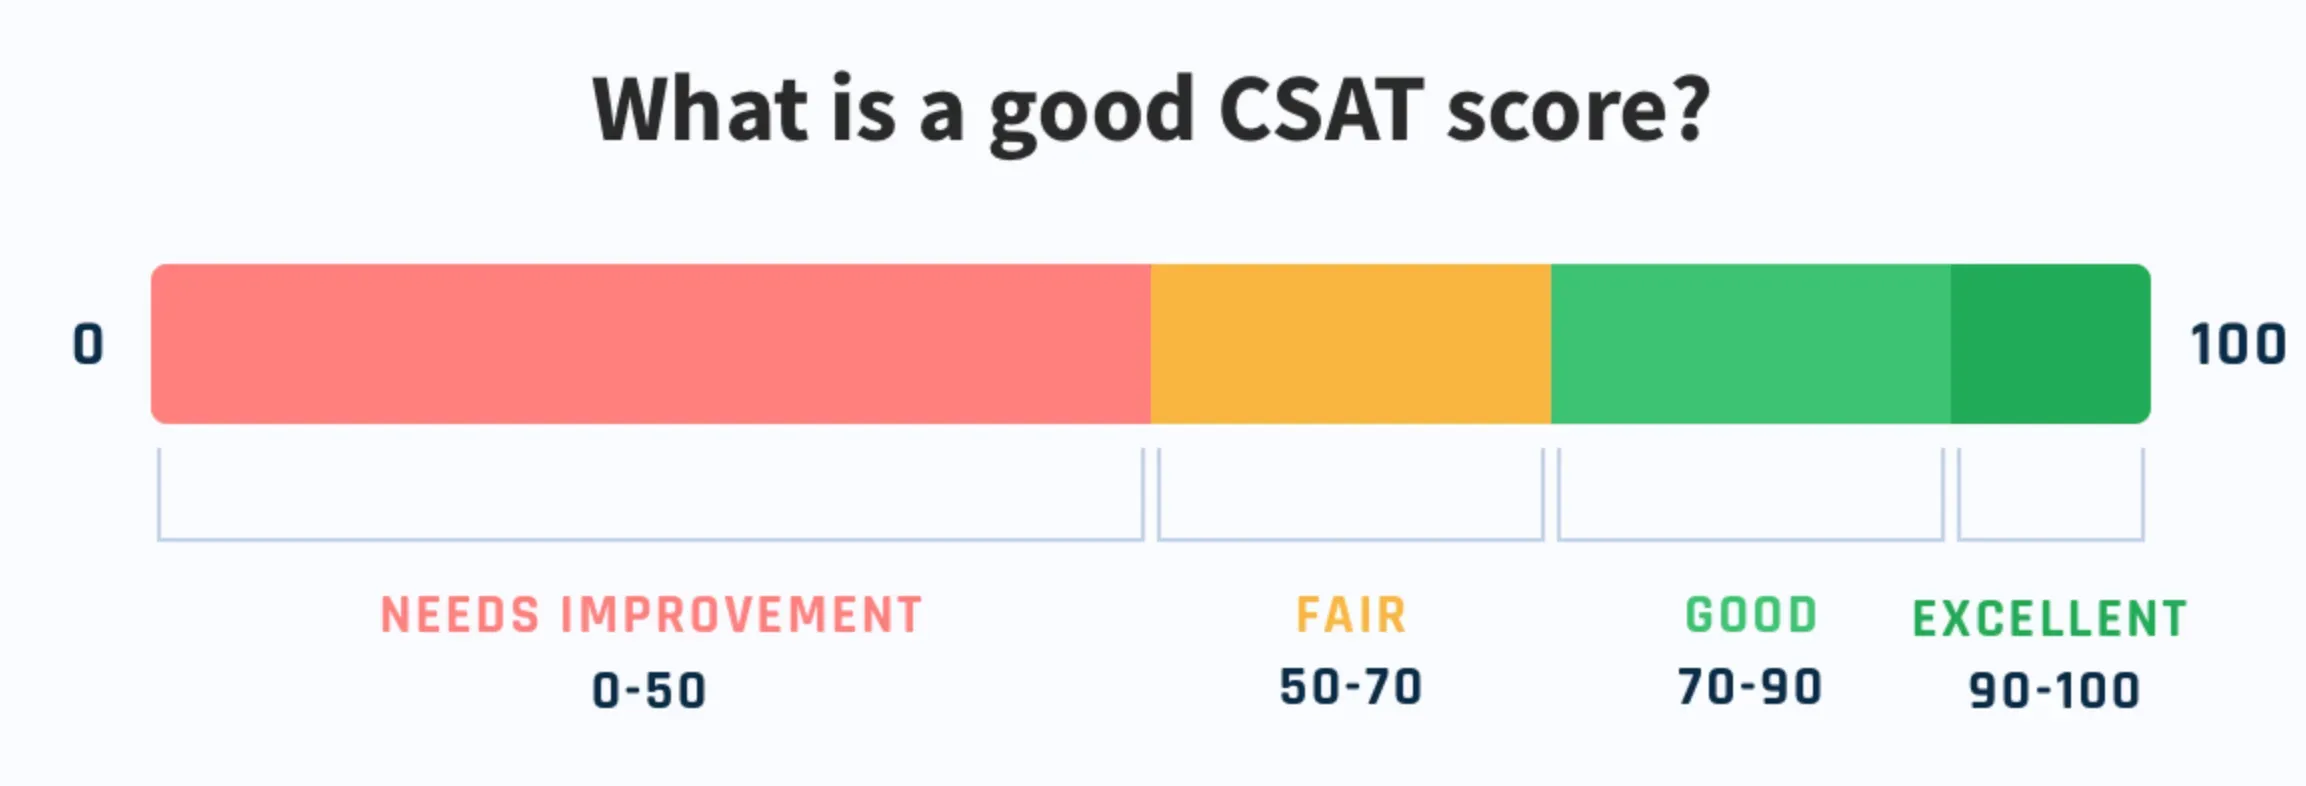 Why Measure CSAT?